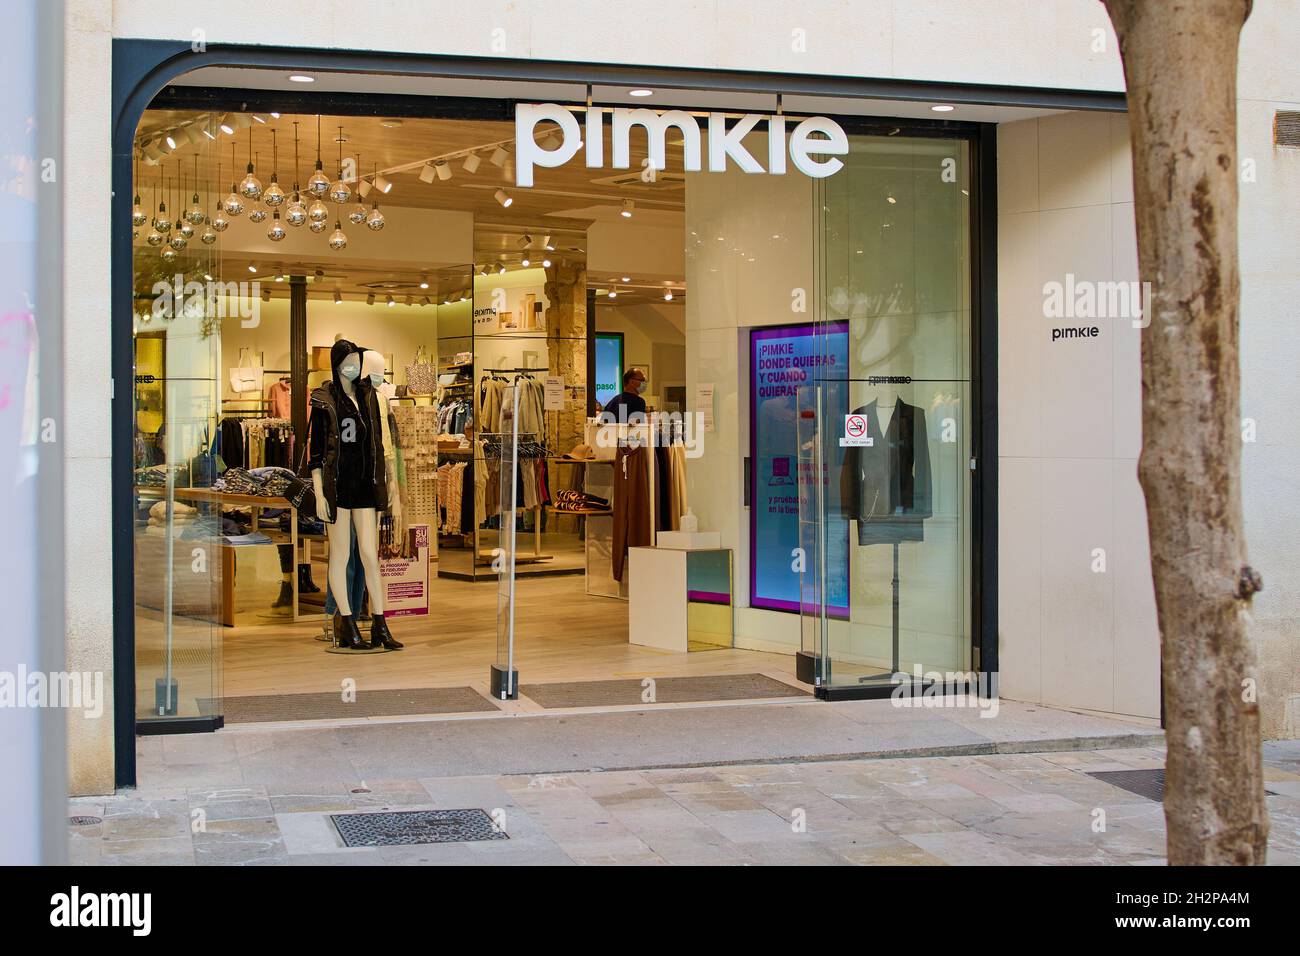 Pimkie shop entrance in Palma de Mallorca, Spain Stock Photo